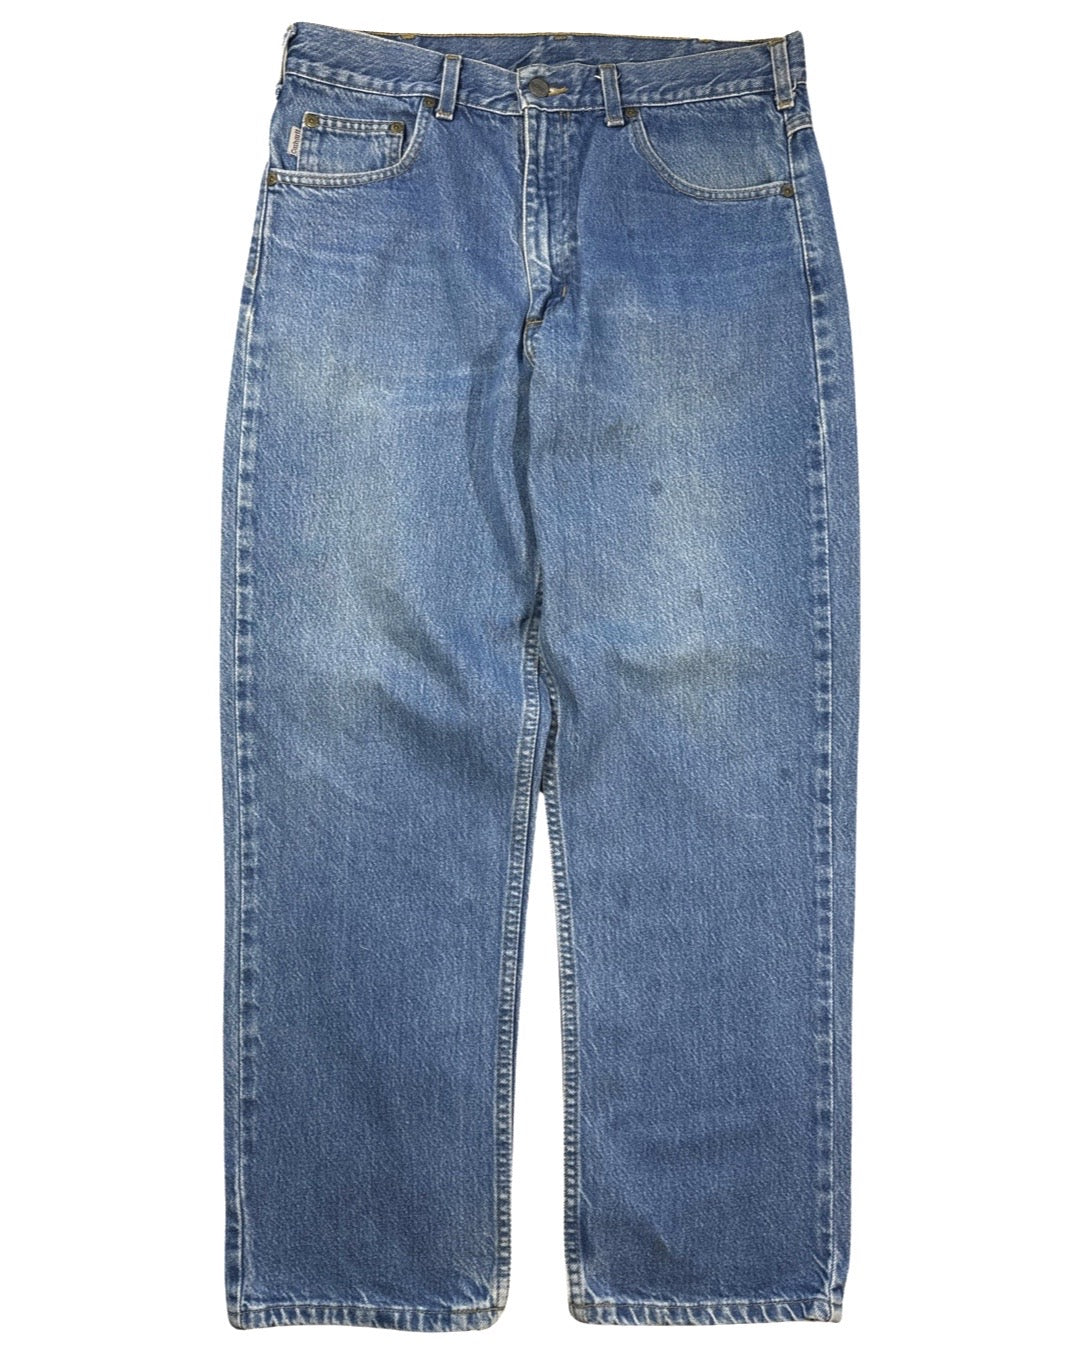 Vintage Carhartt Jeans - W 34"